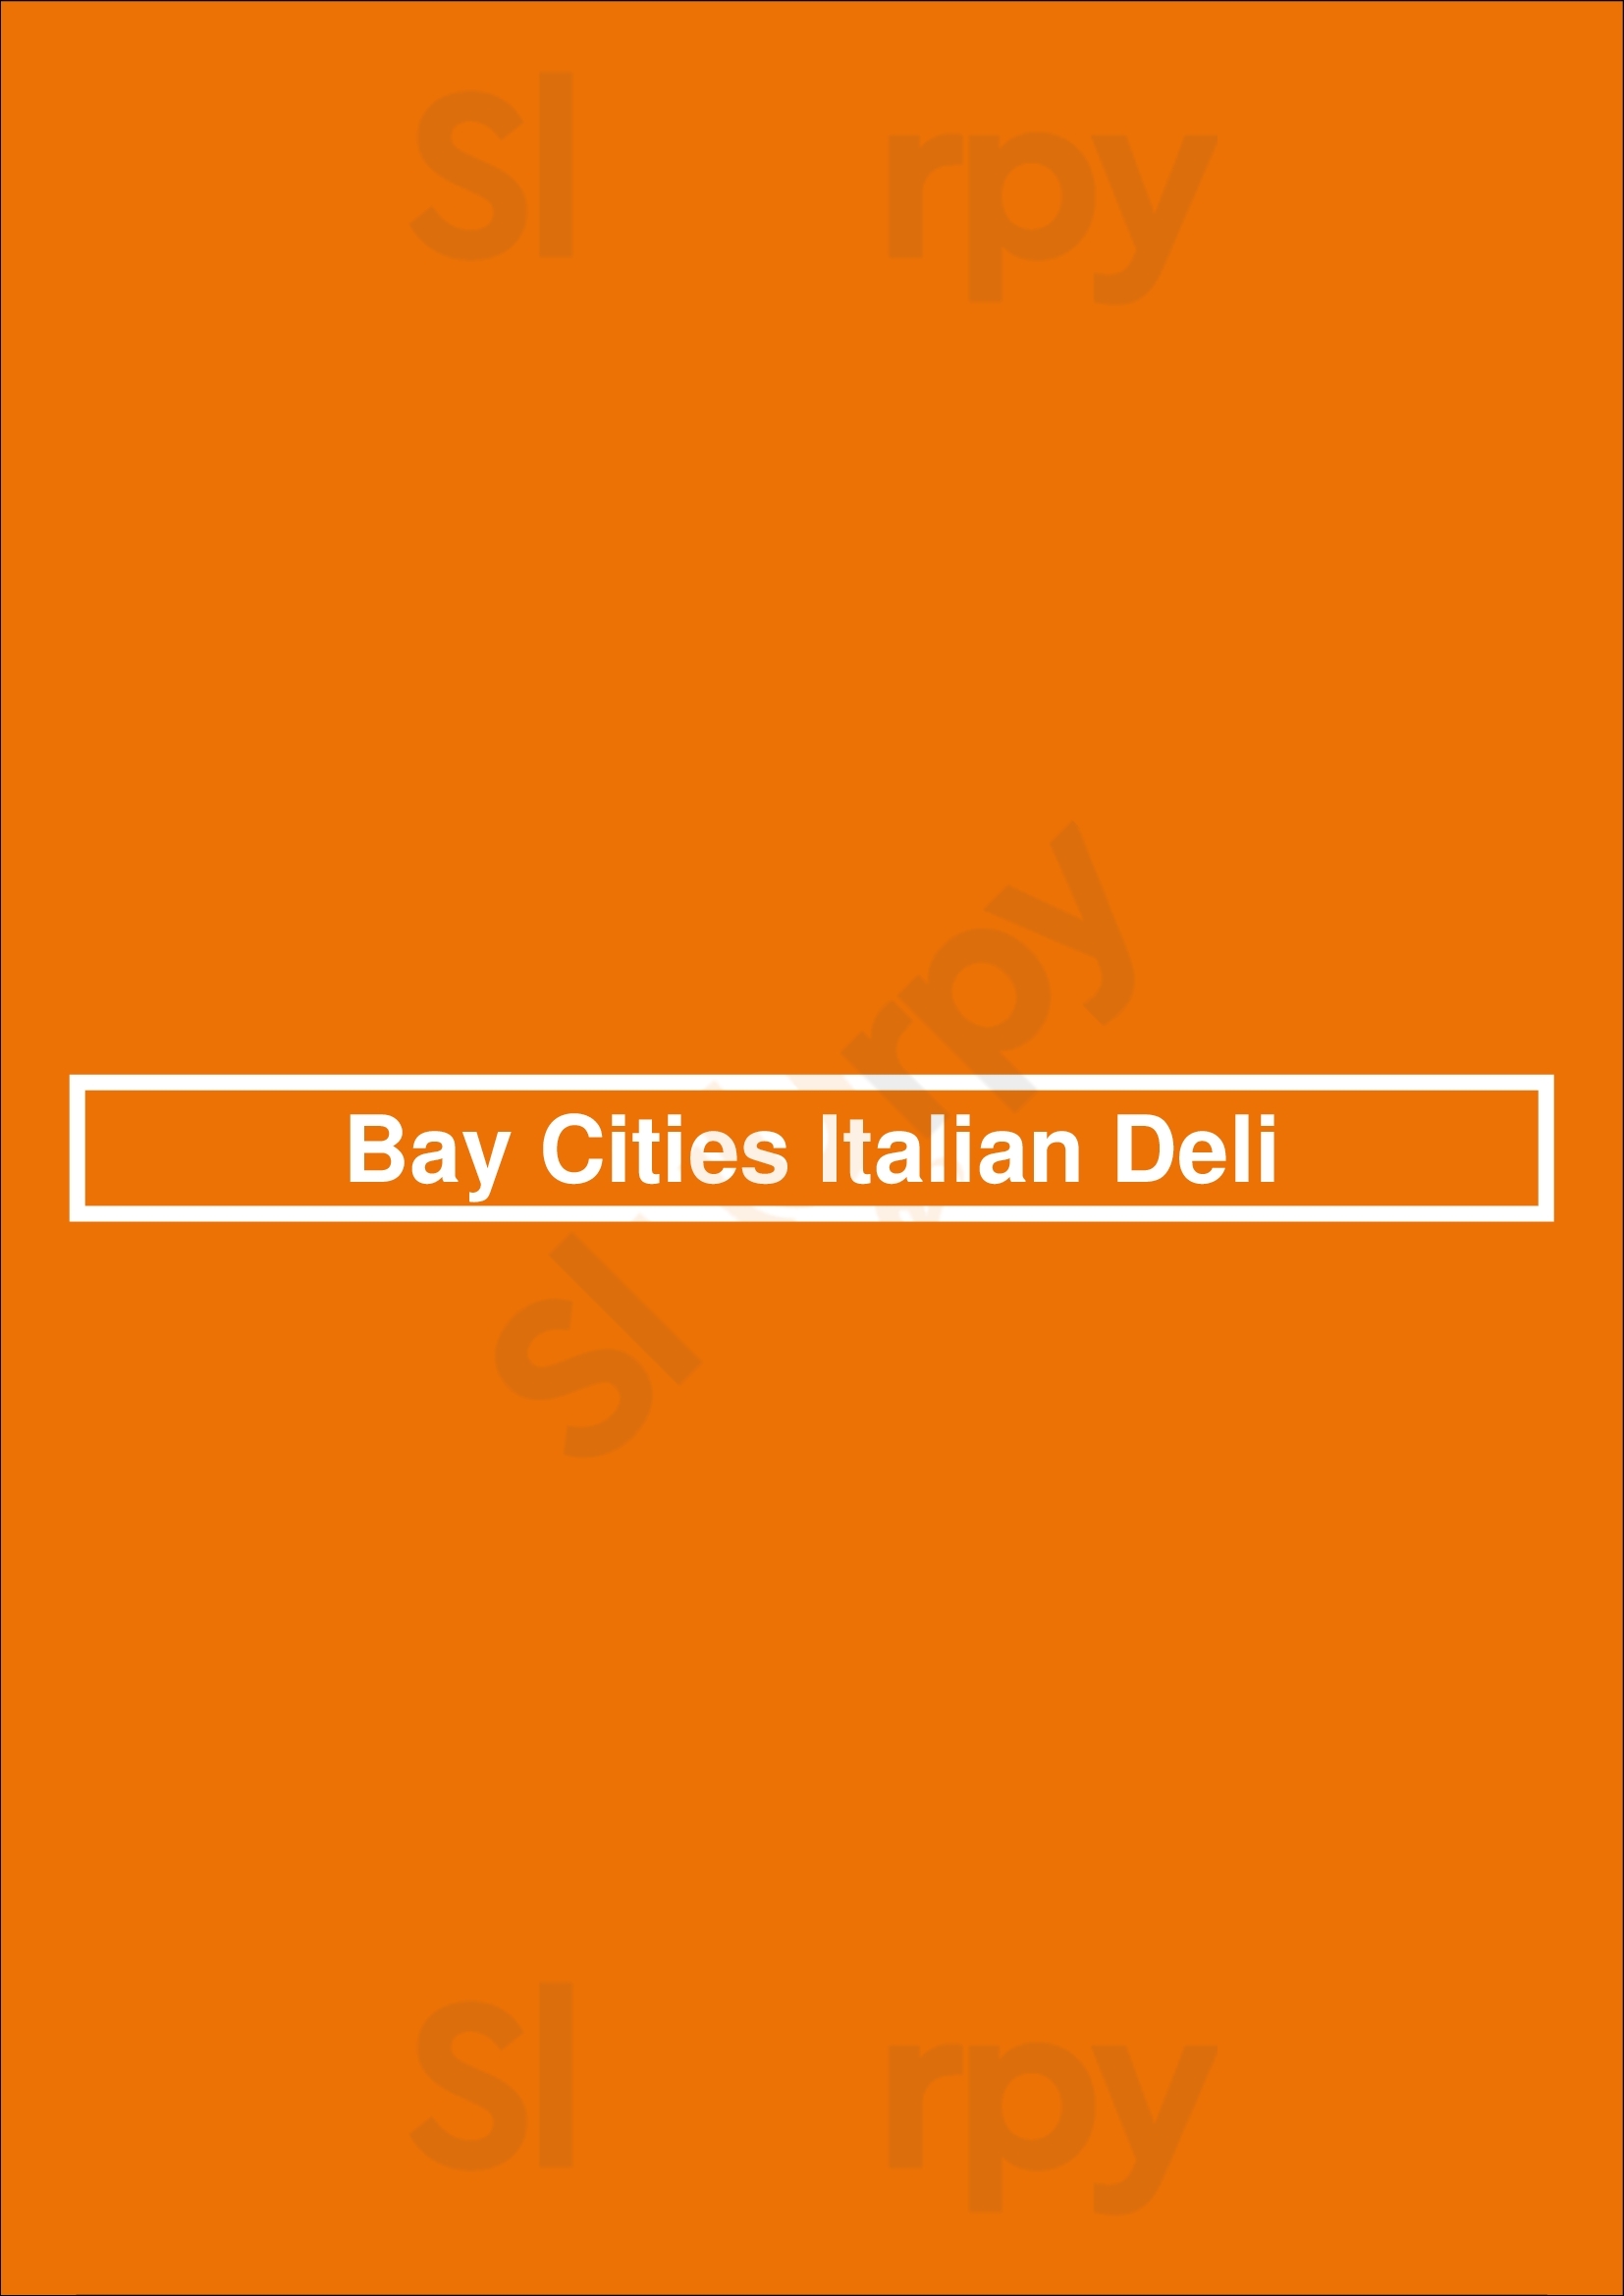 Bay Cities Italian Deli Santa Monica Menu - 1